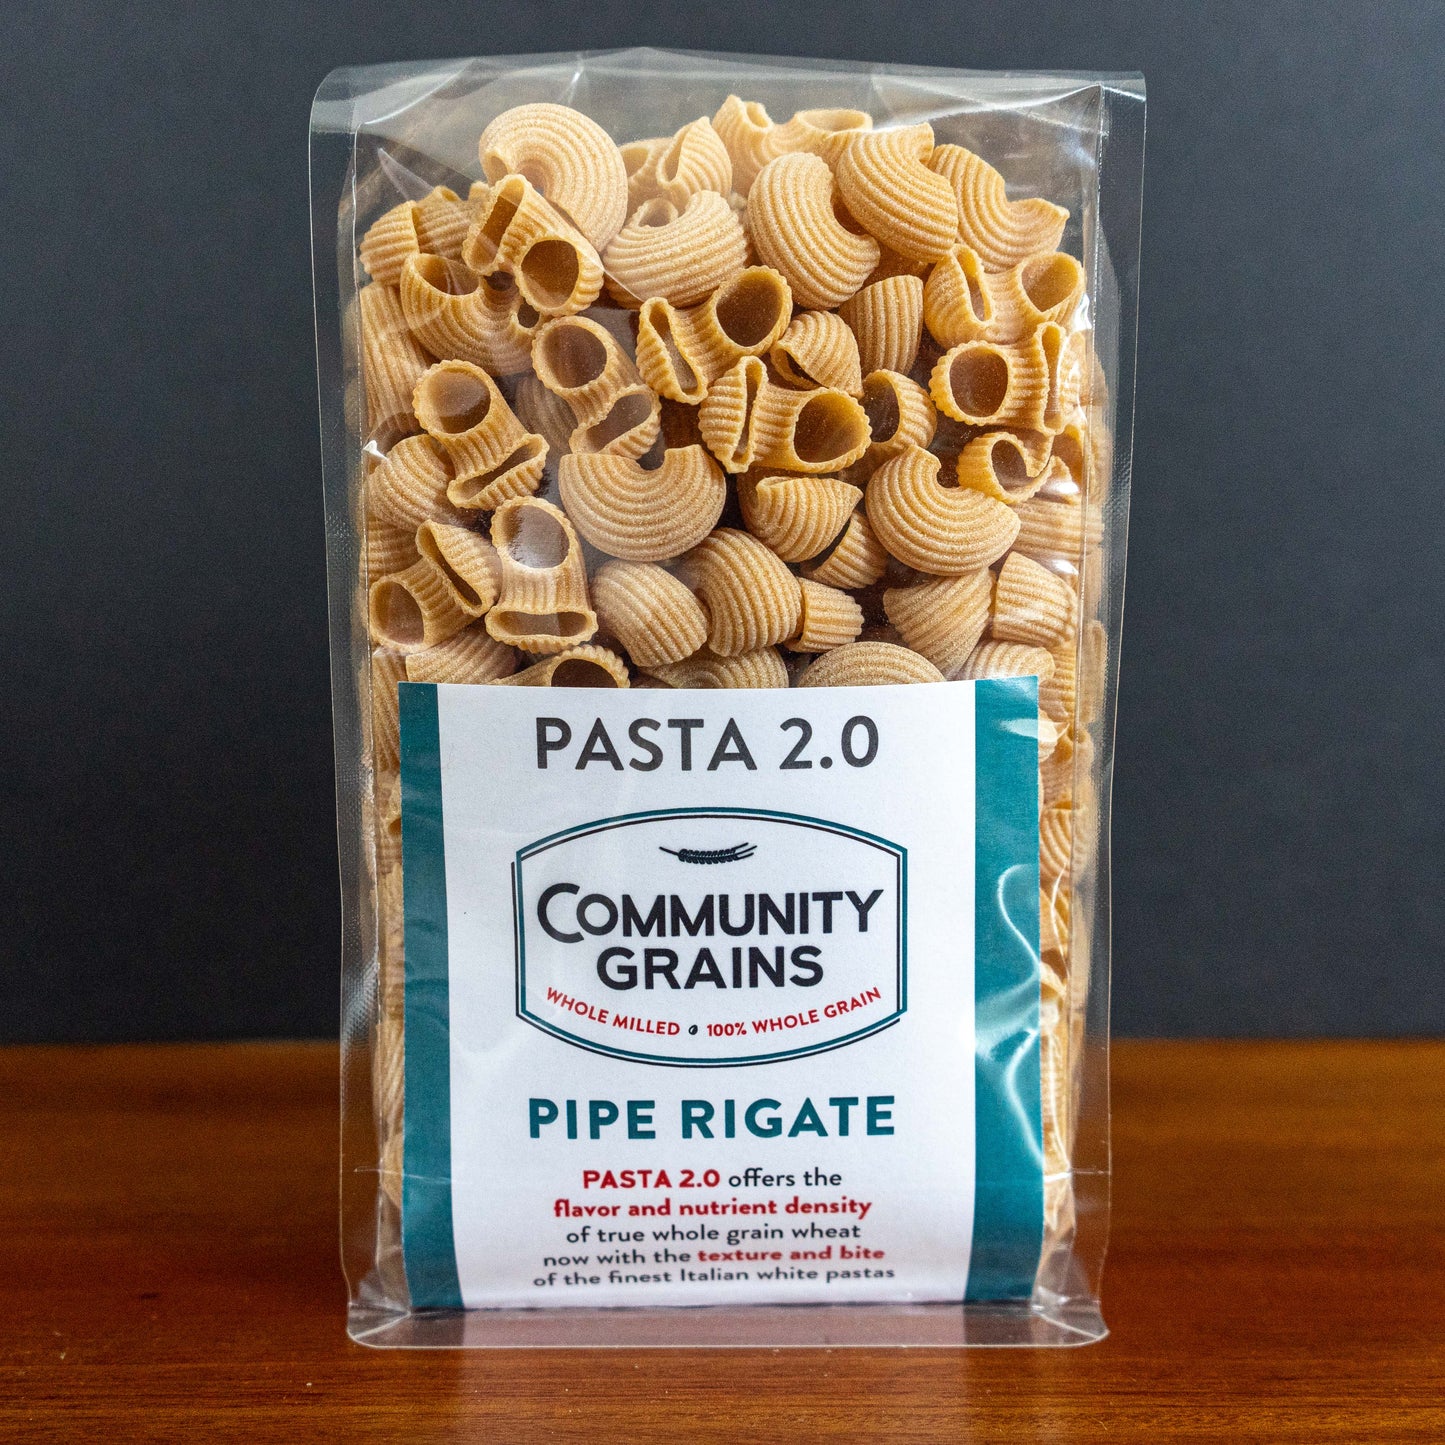 Pipe Rigate Pasta 2.0